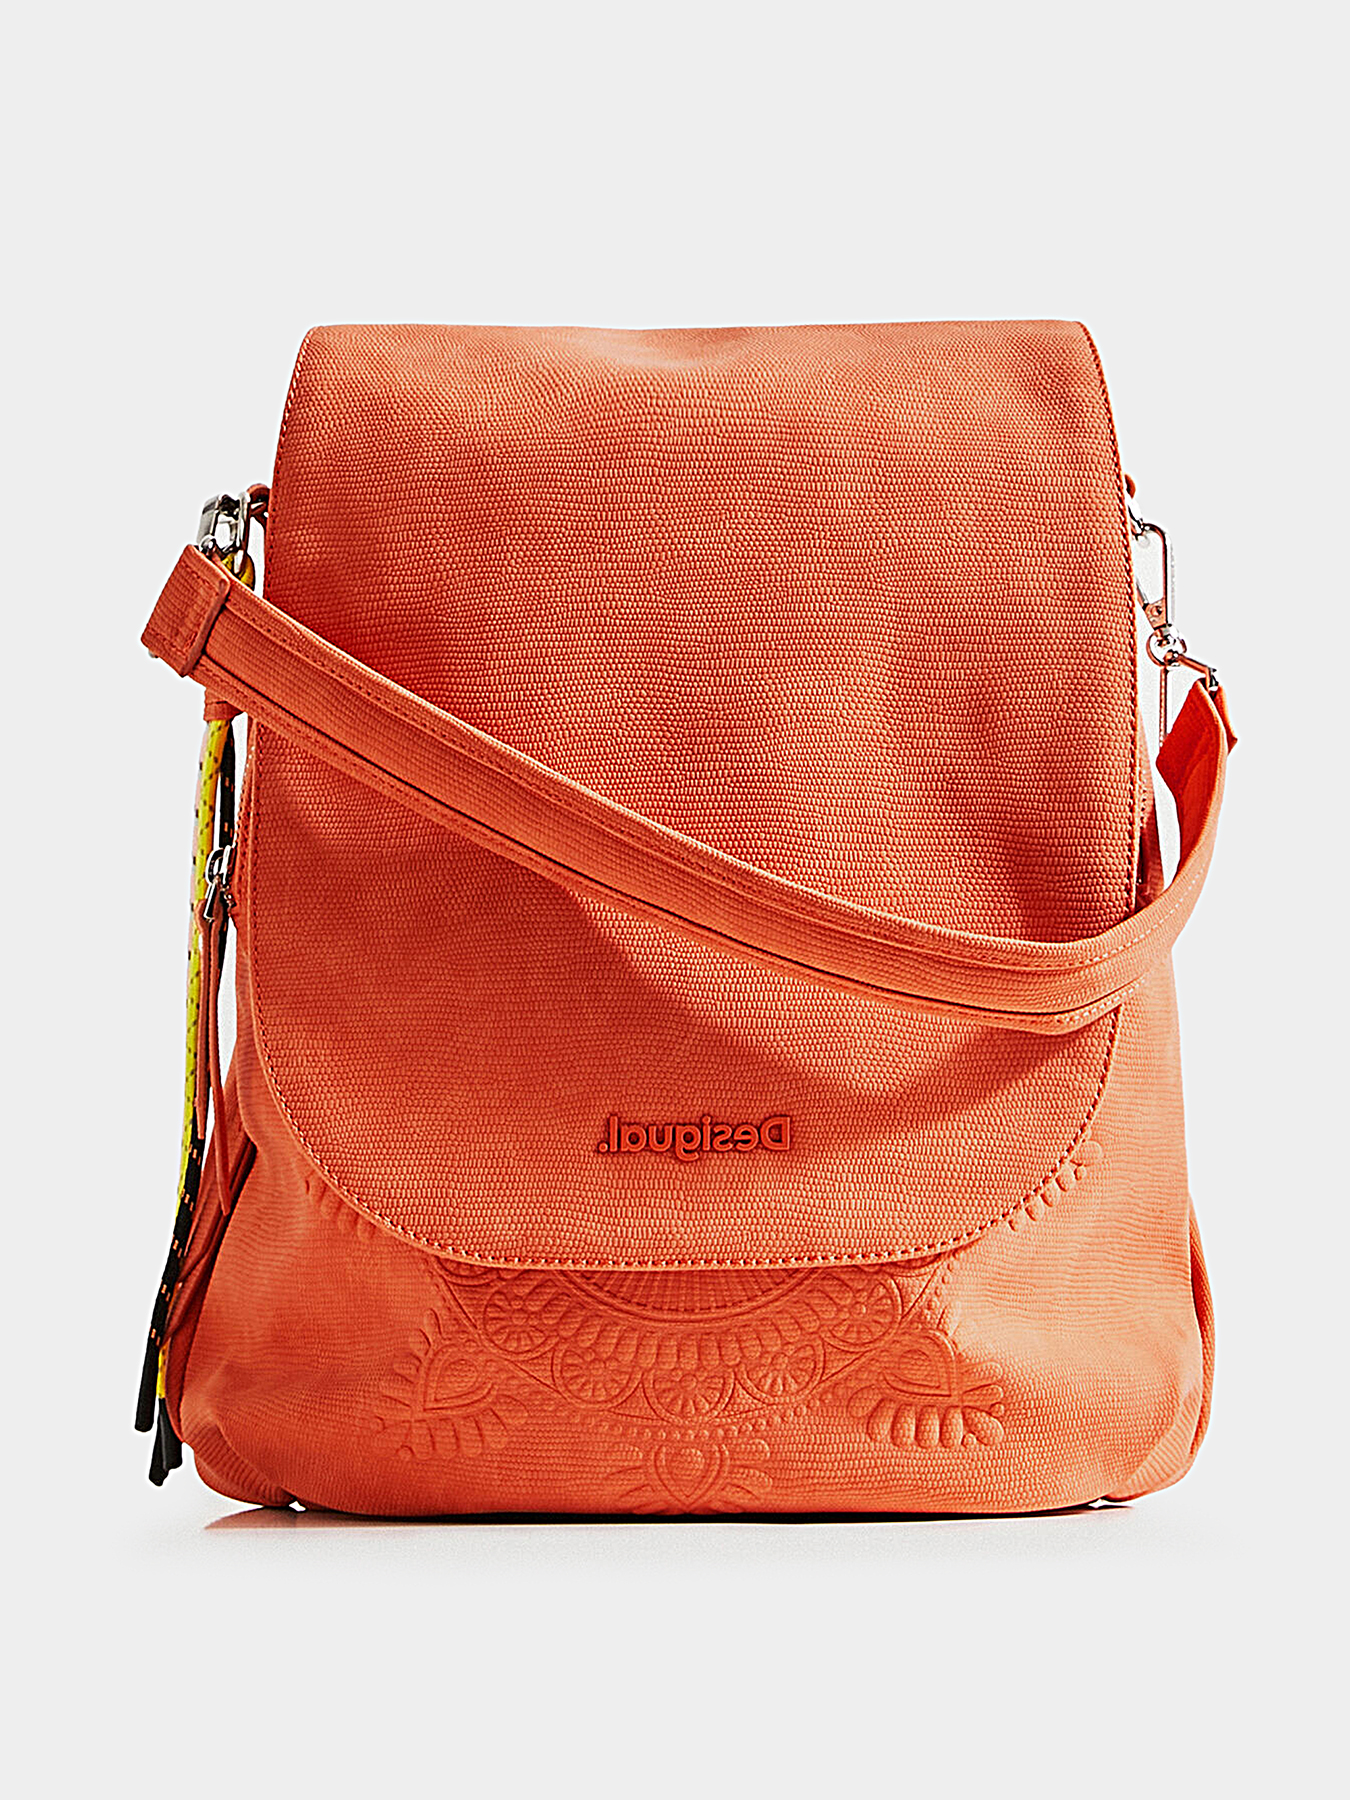 ANKARA backpack brand DESIGUAL —